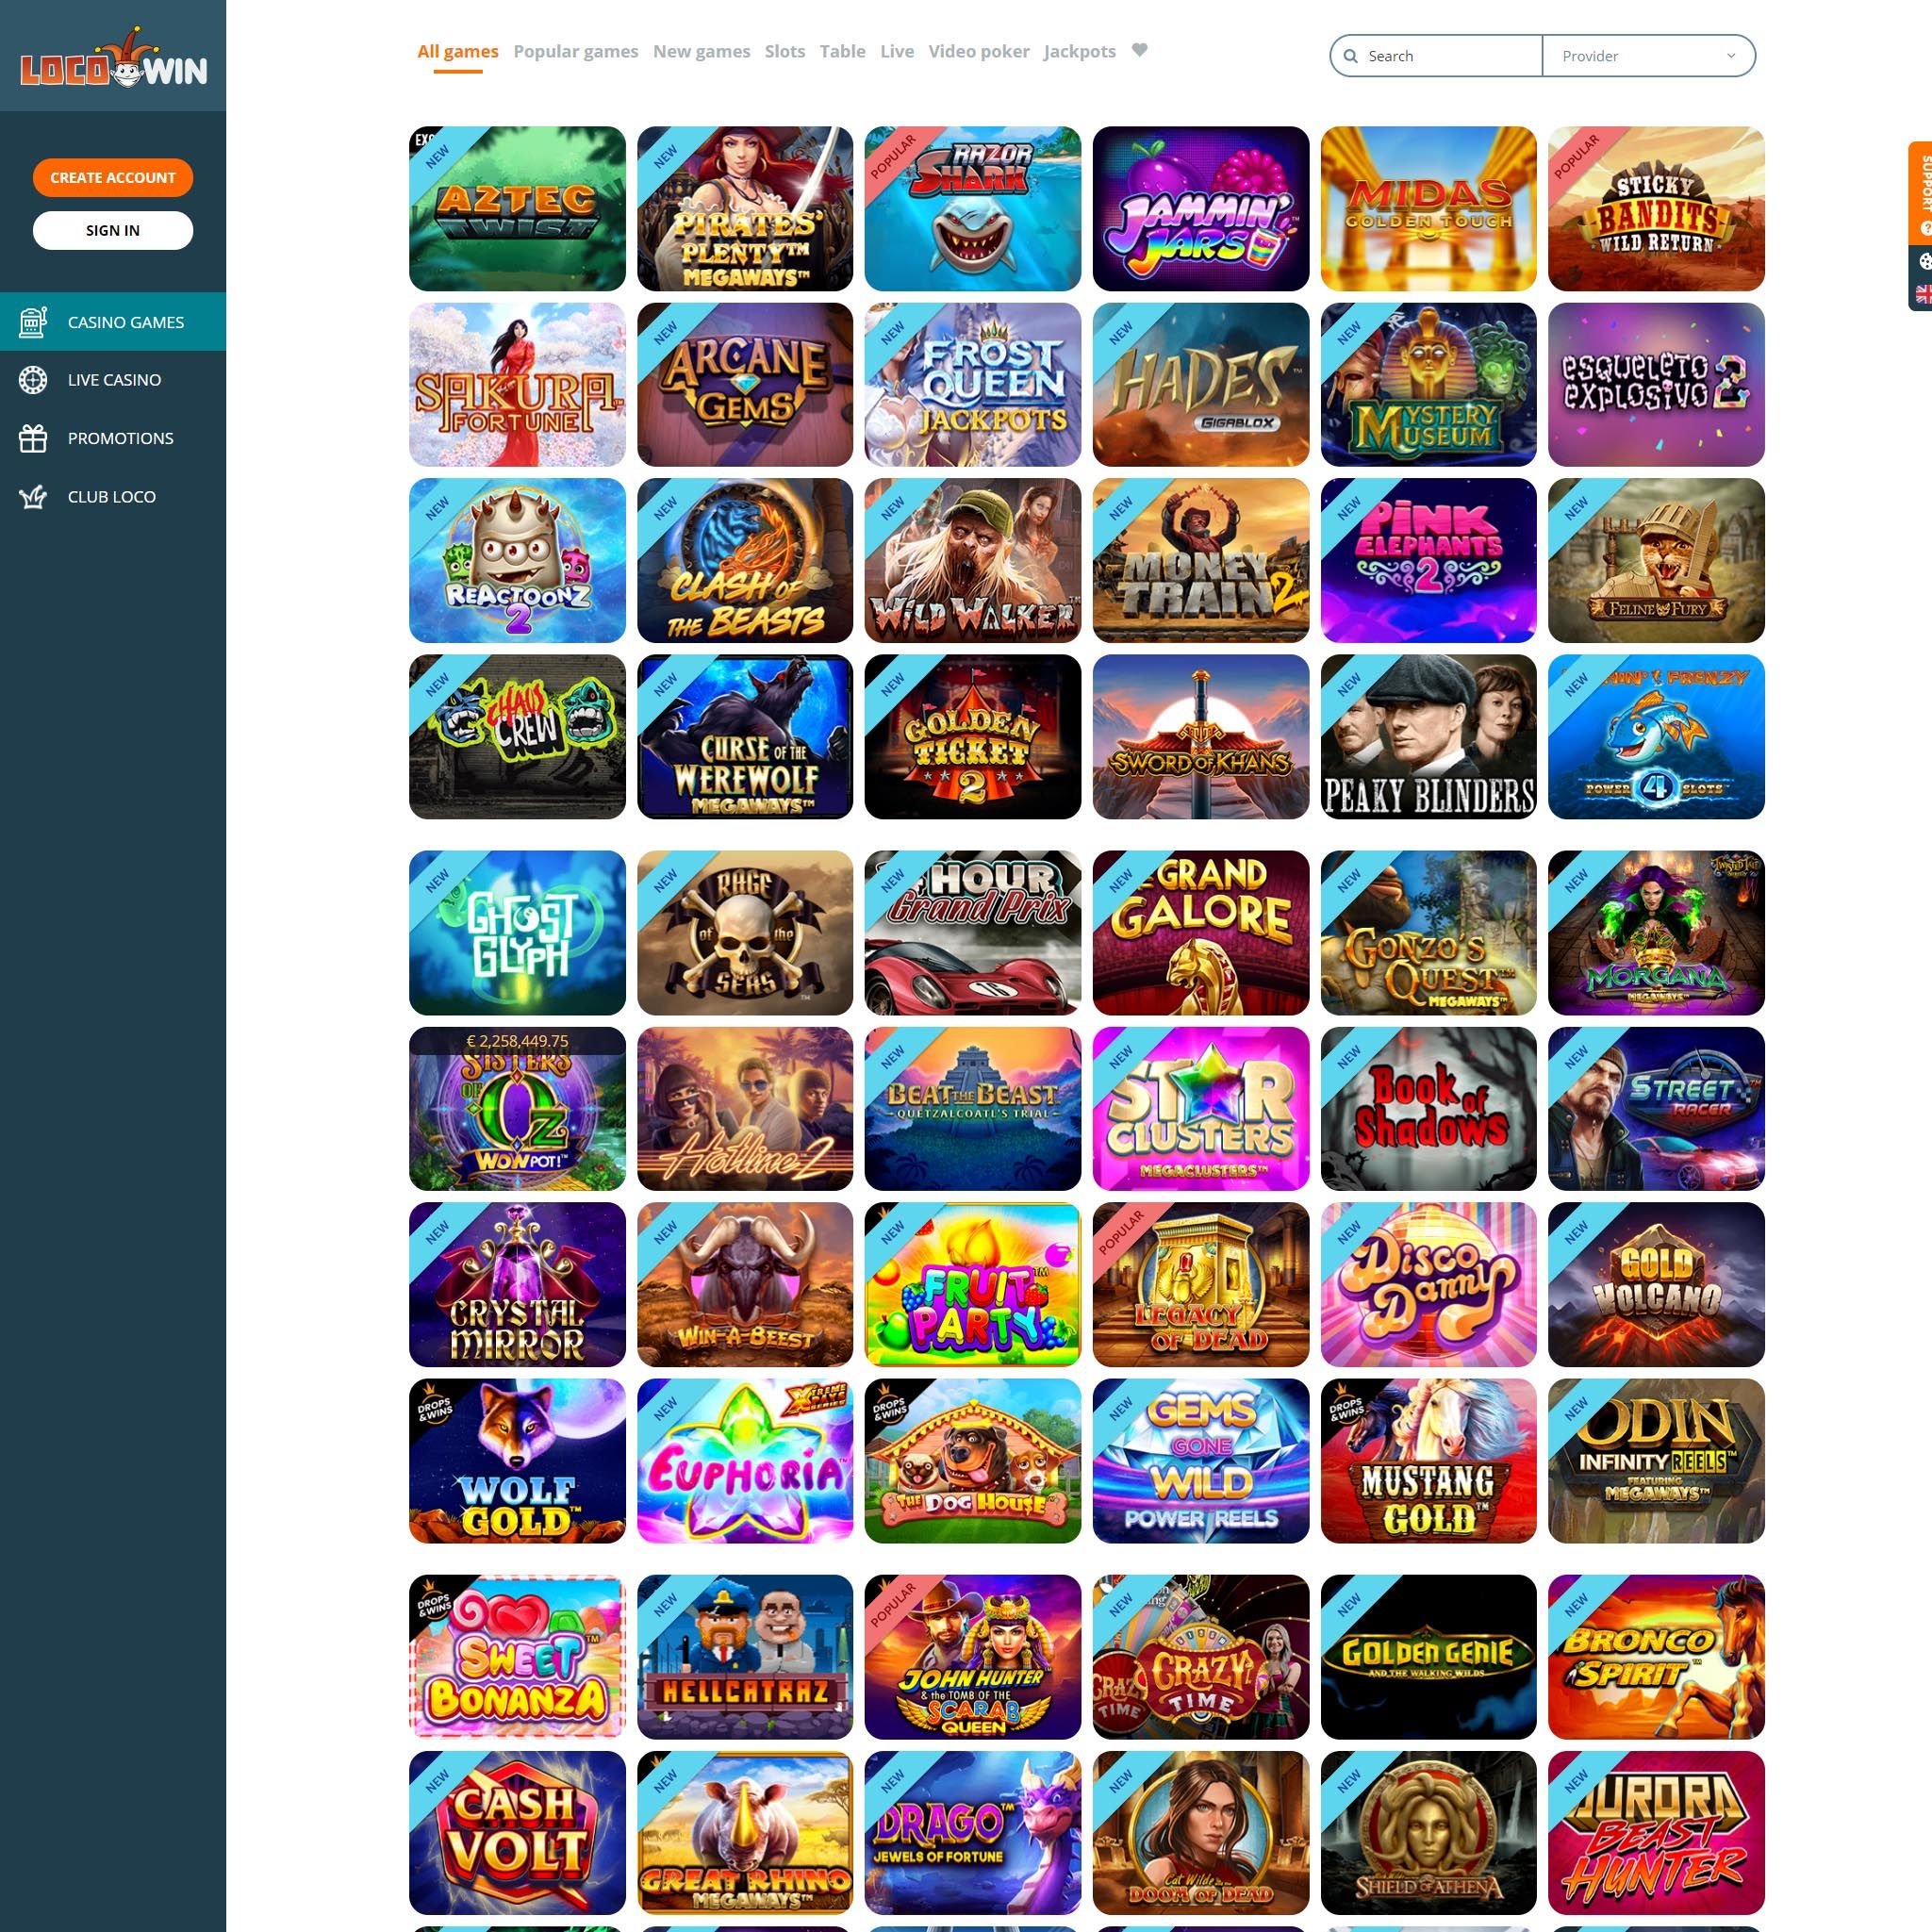 Locowin Casino full games catalogue